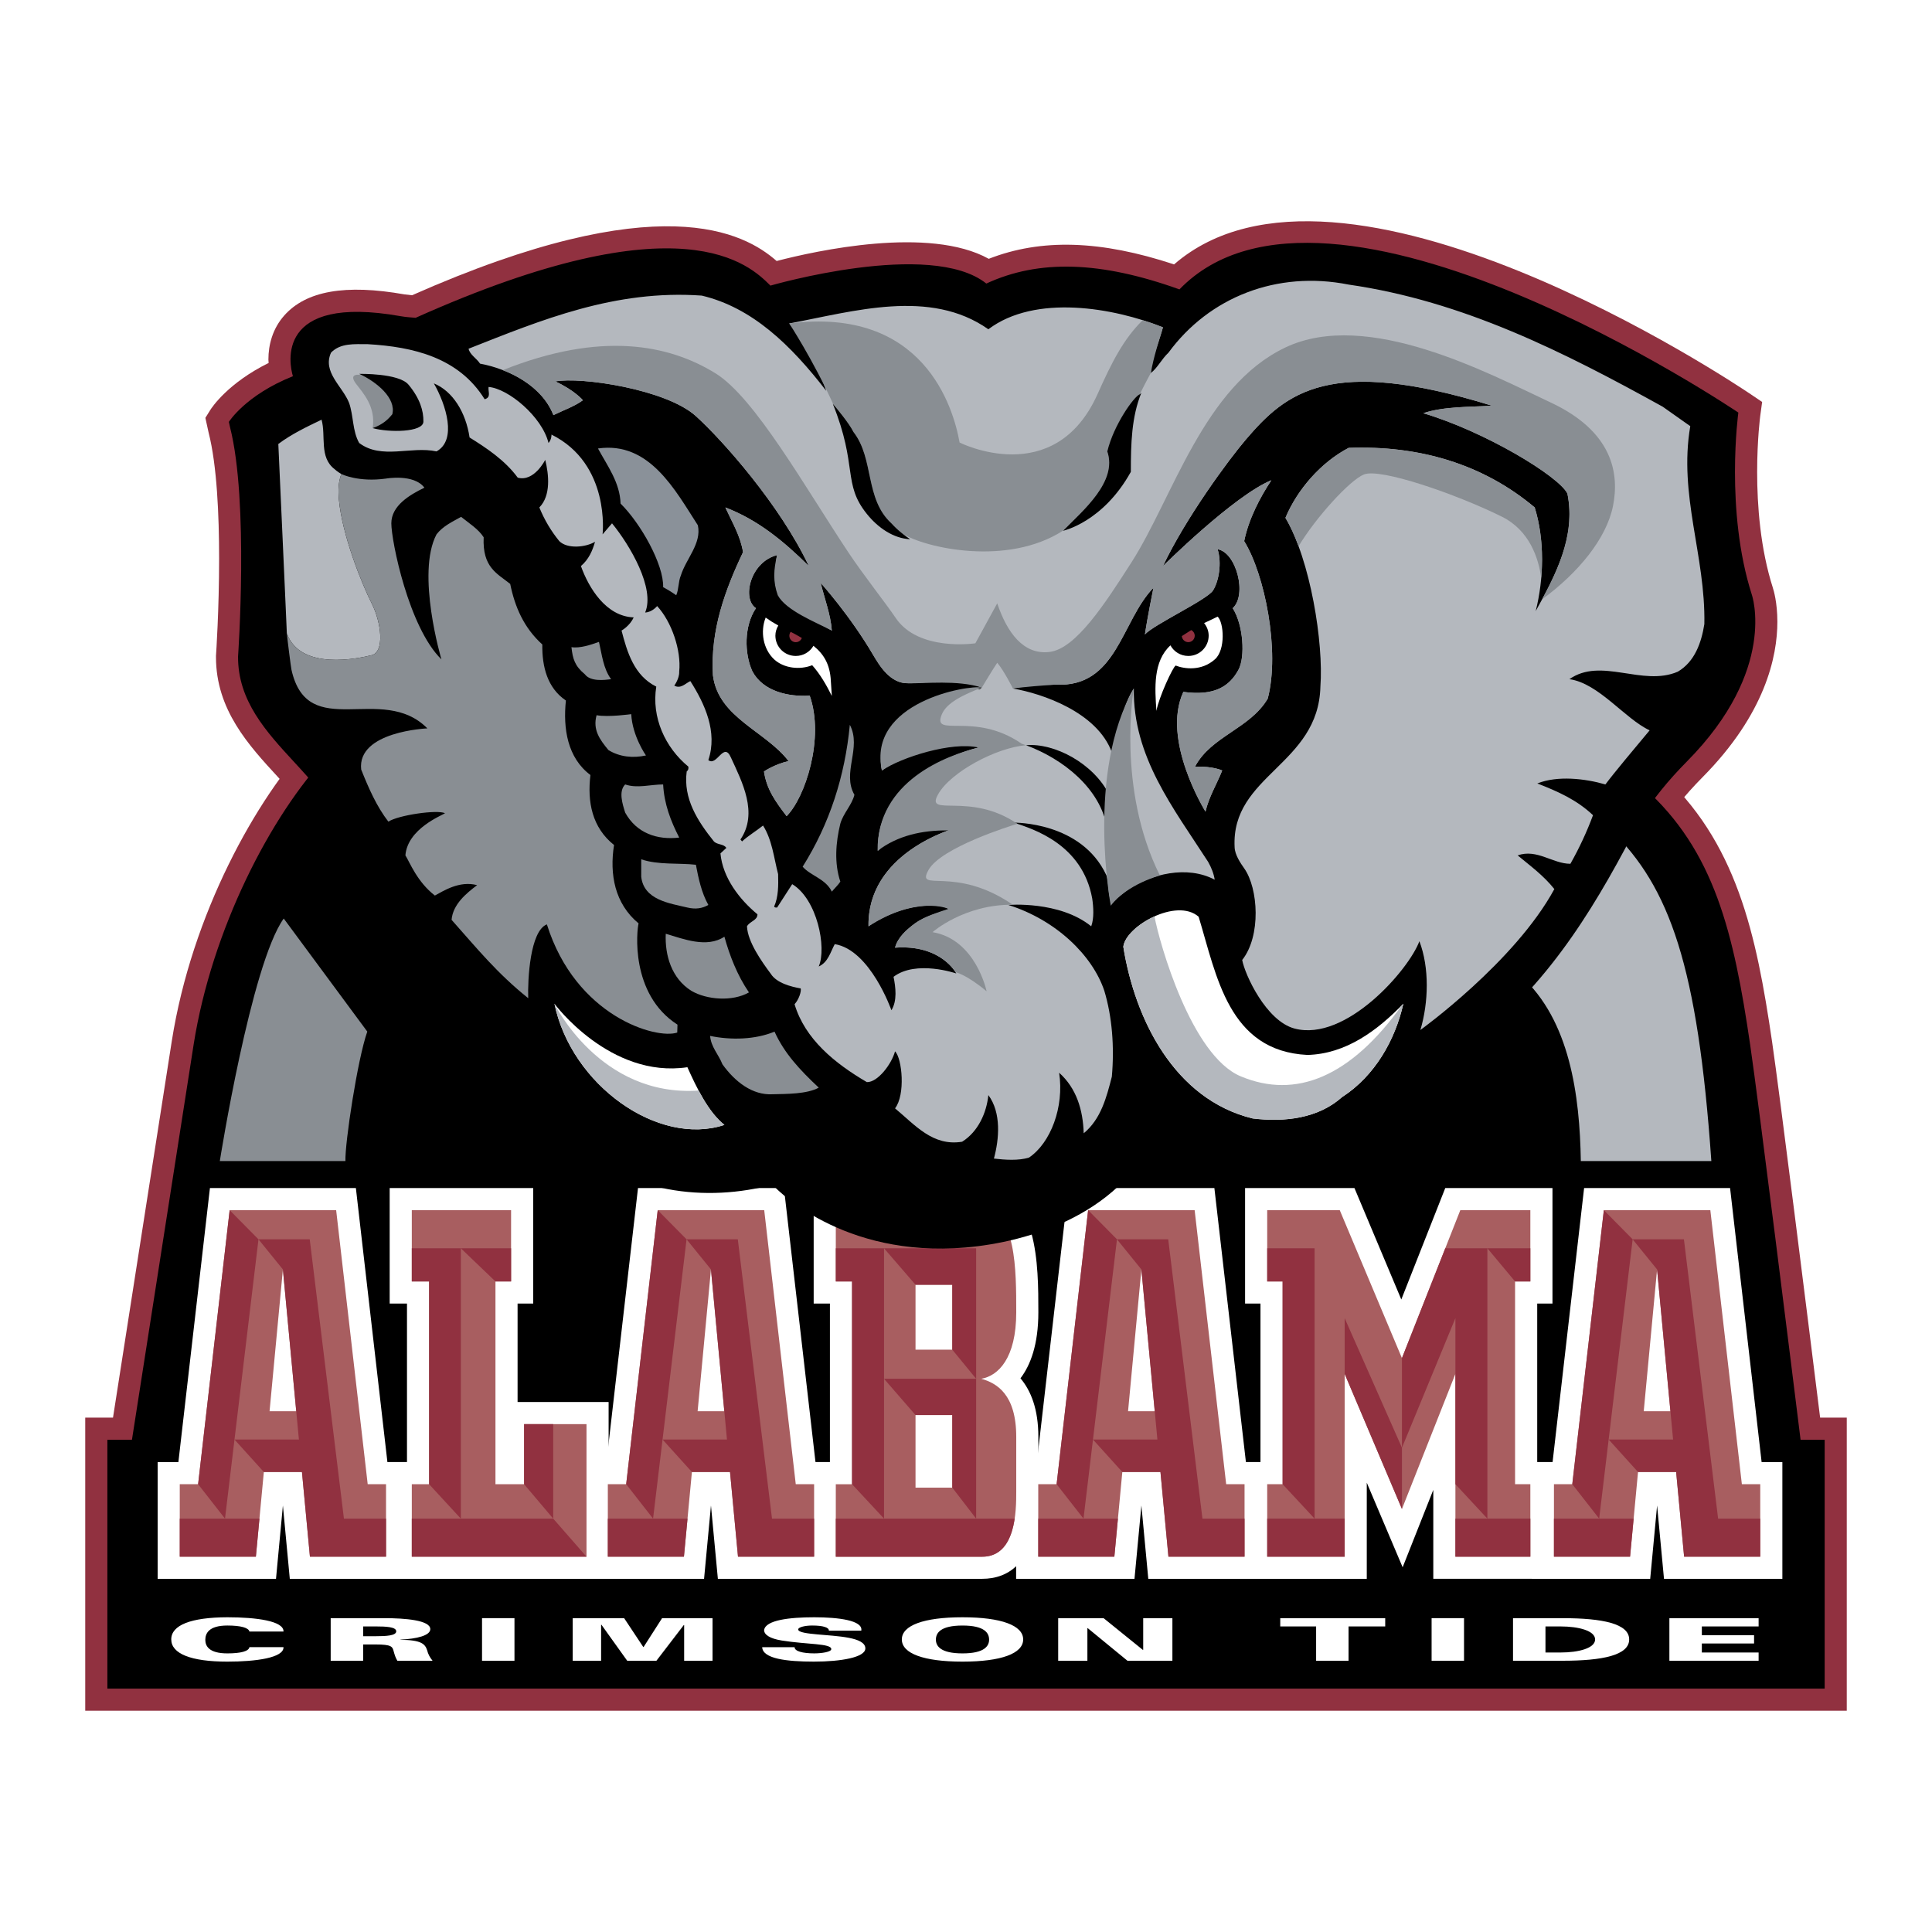 Alabama Crimson Tide(阿拉巴马大学红潮队)logo0